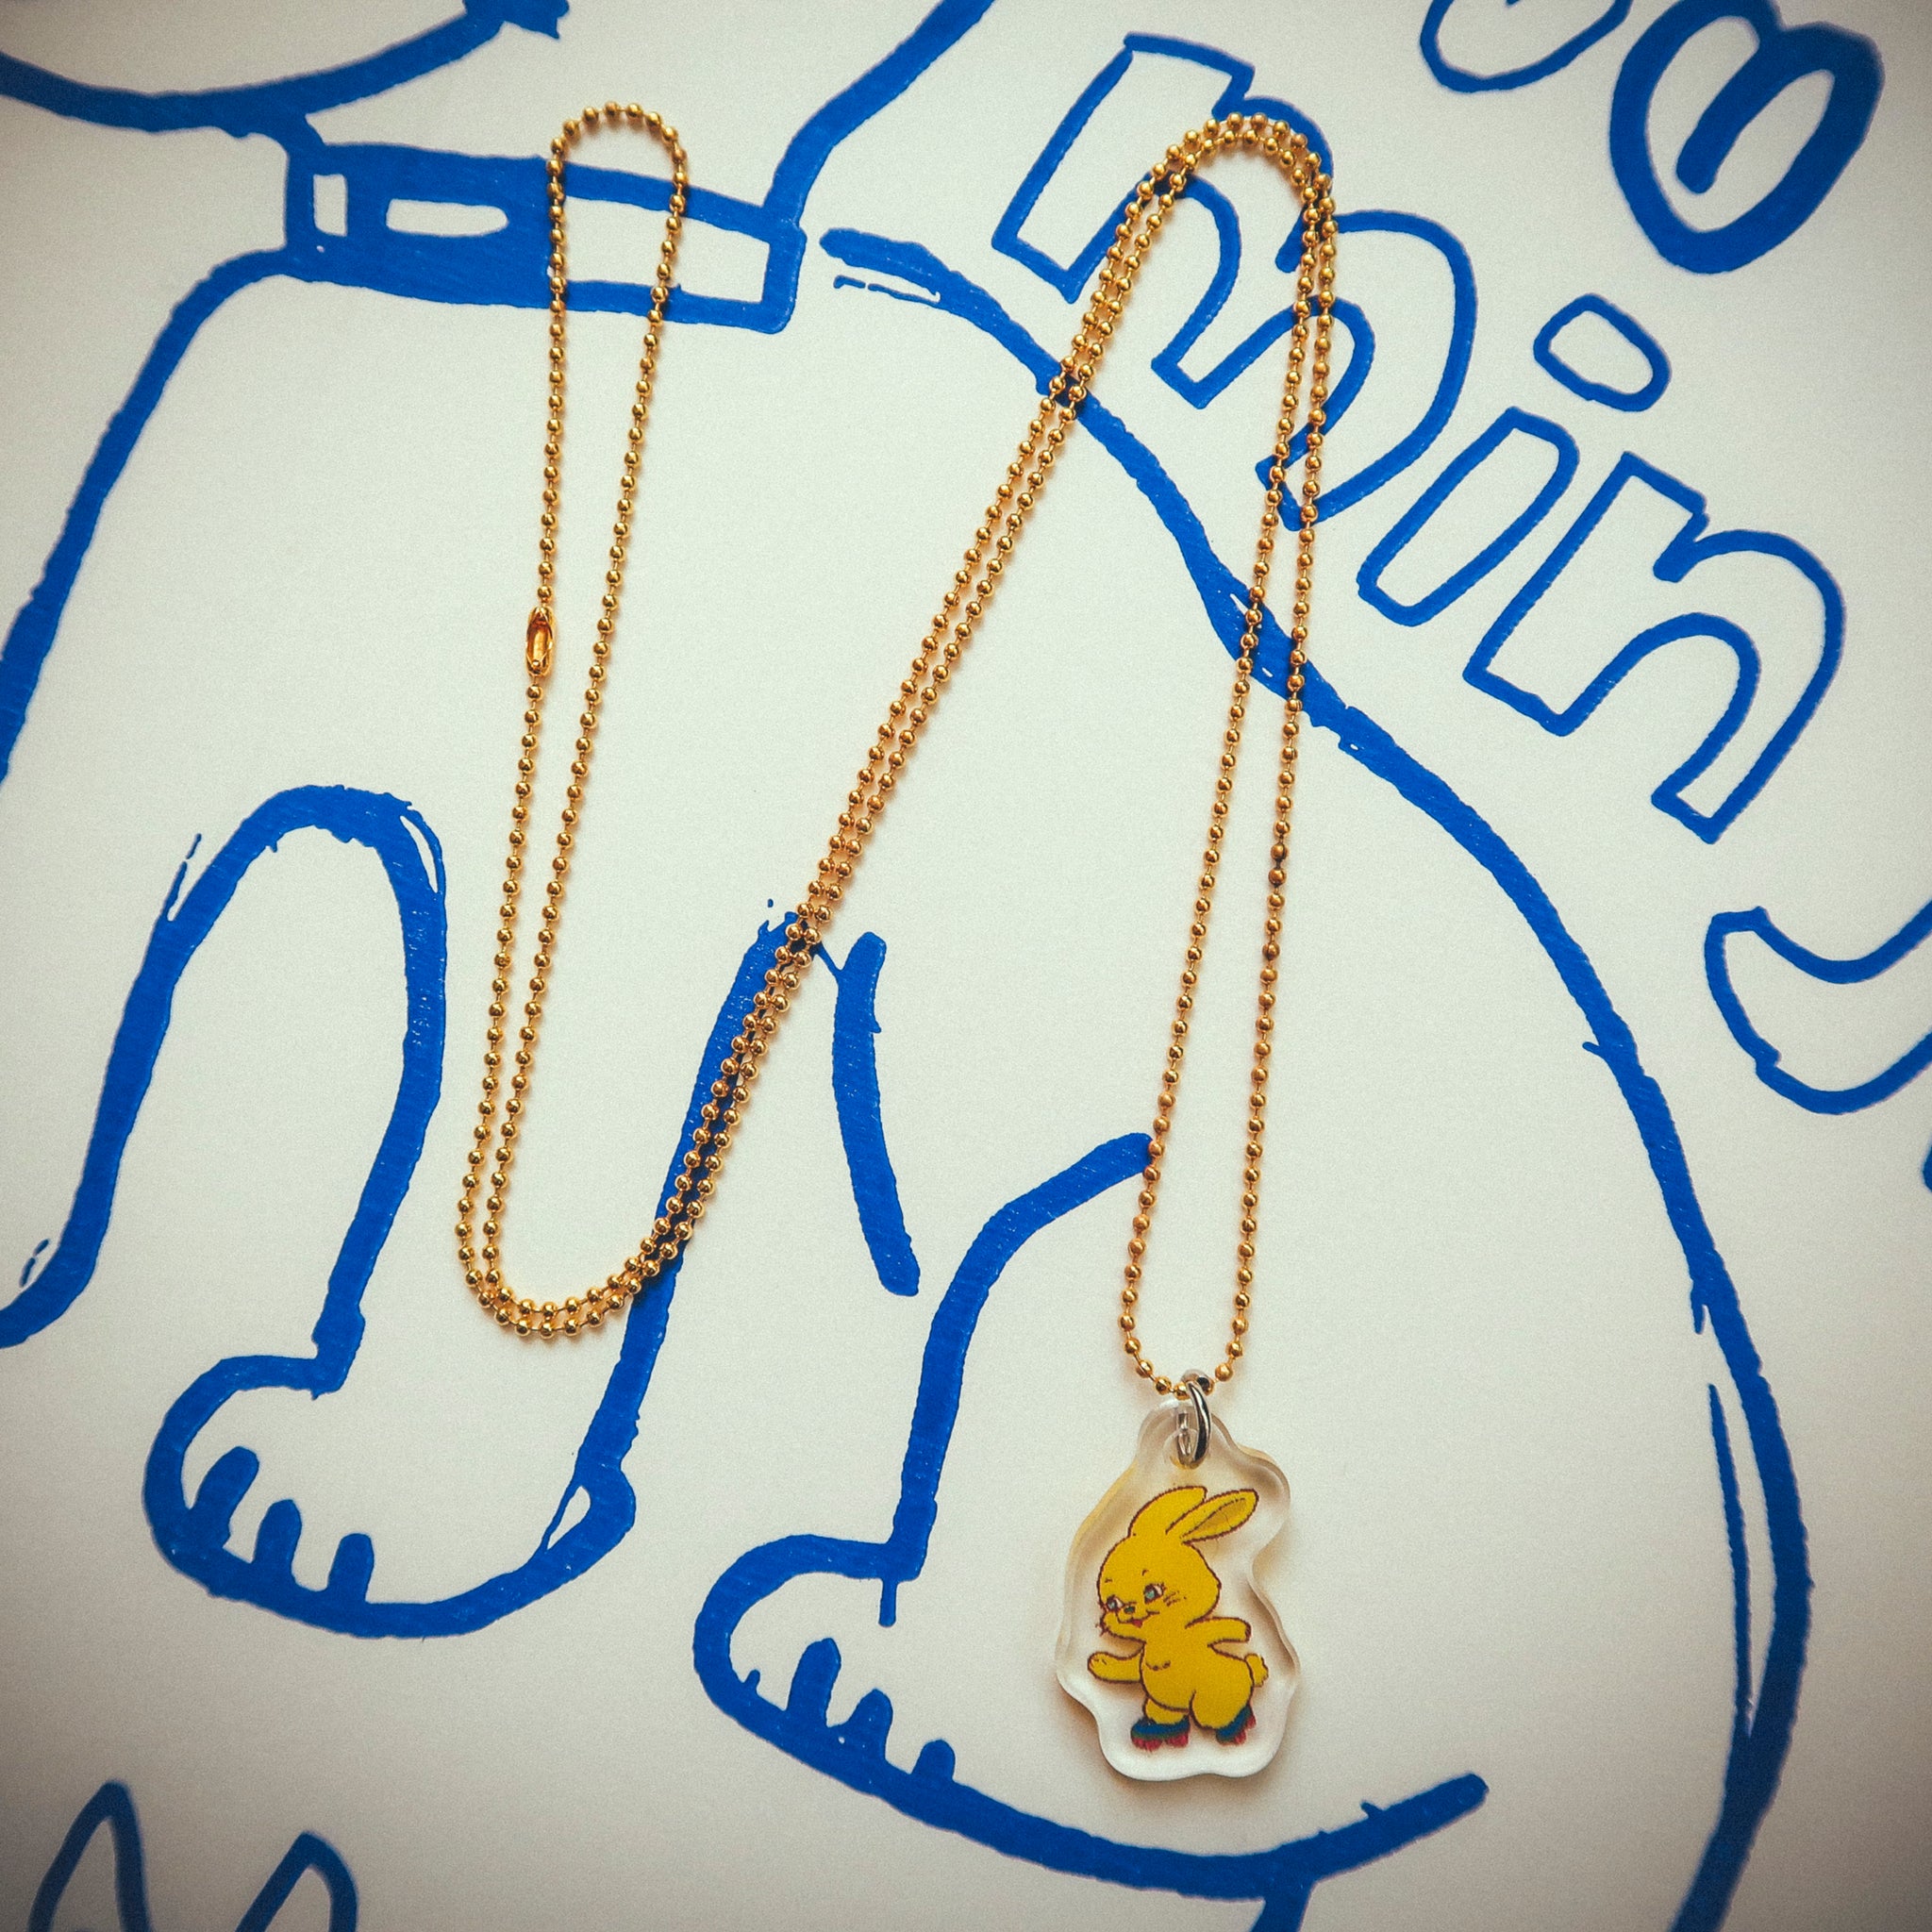 NewJeans Tokki/Bunny Mascot K-pop y2k style Ballchain Pendant Necklace with Glossy Acrylic Charm